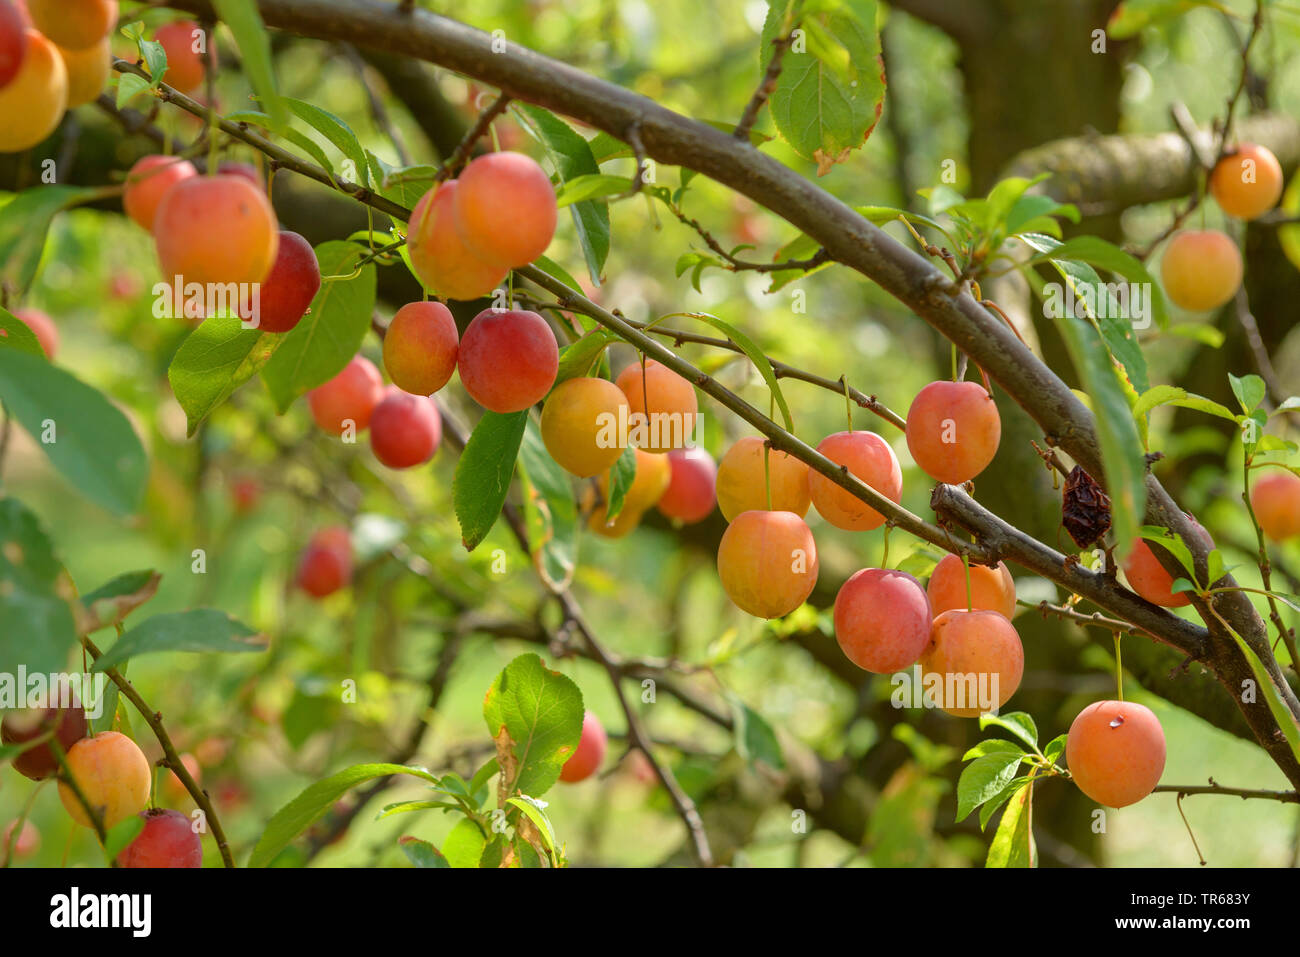 Japanese plum, Chinese plum (Prunus salicina), branch with fruits Stock Photo